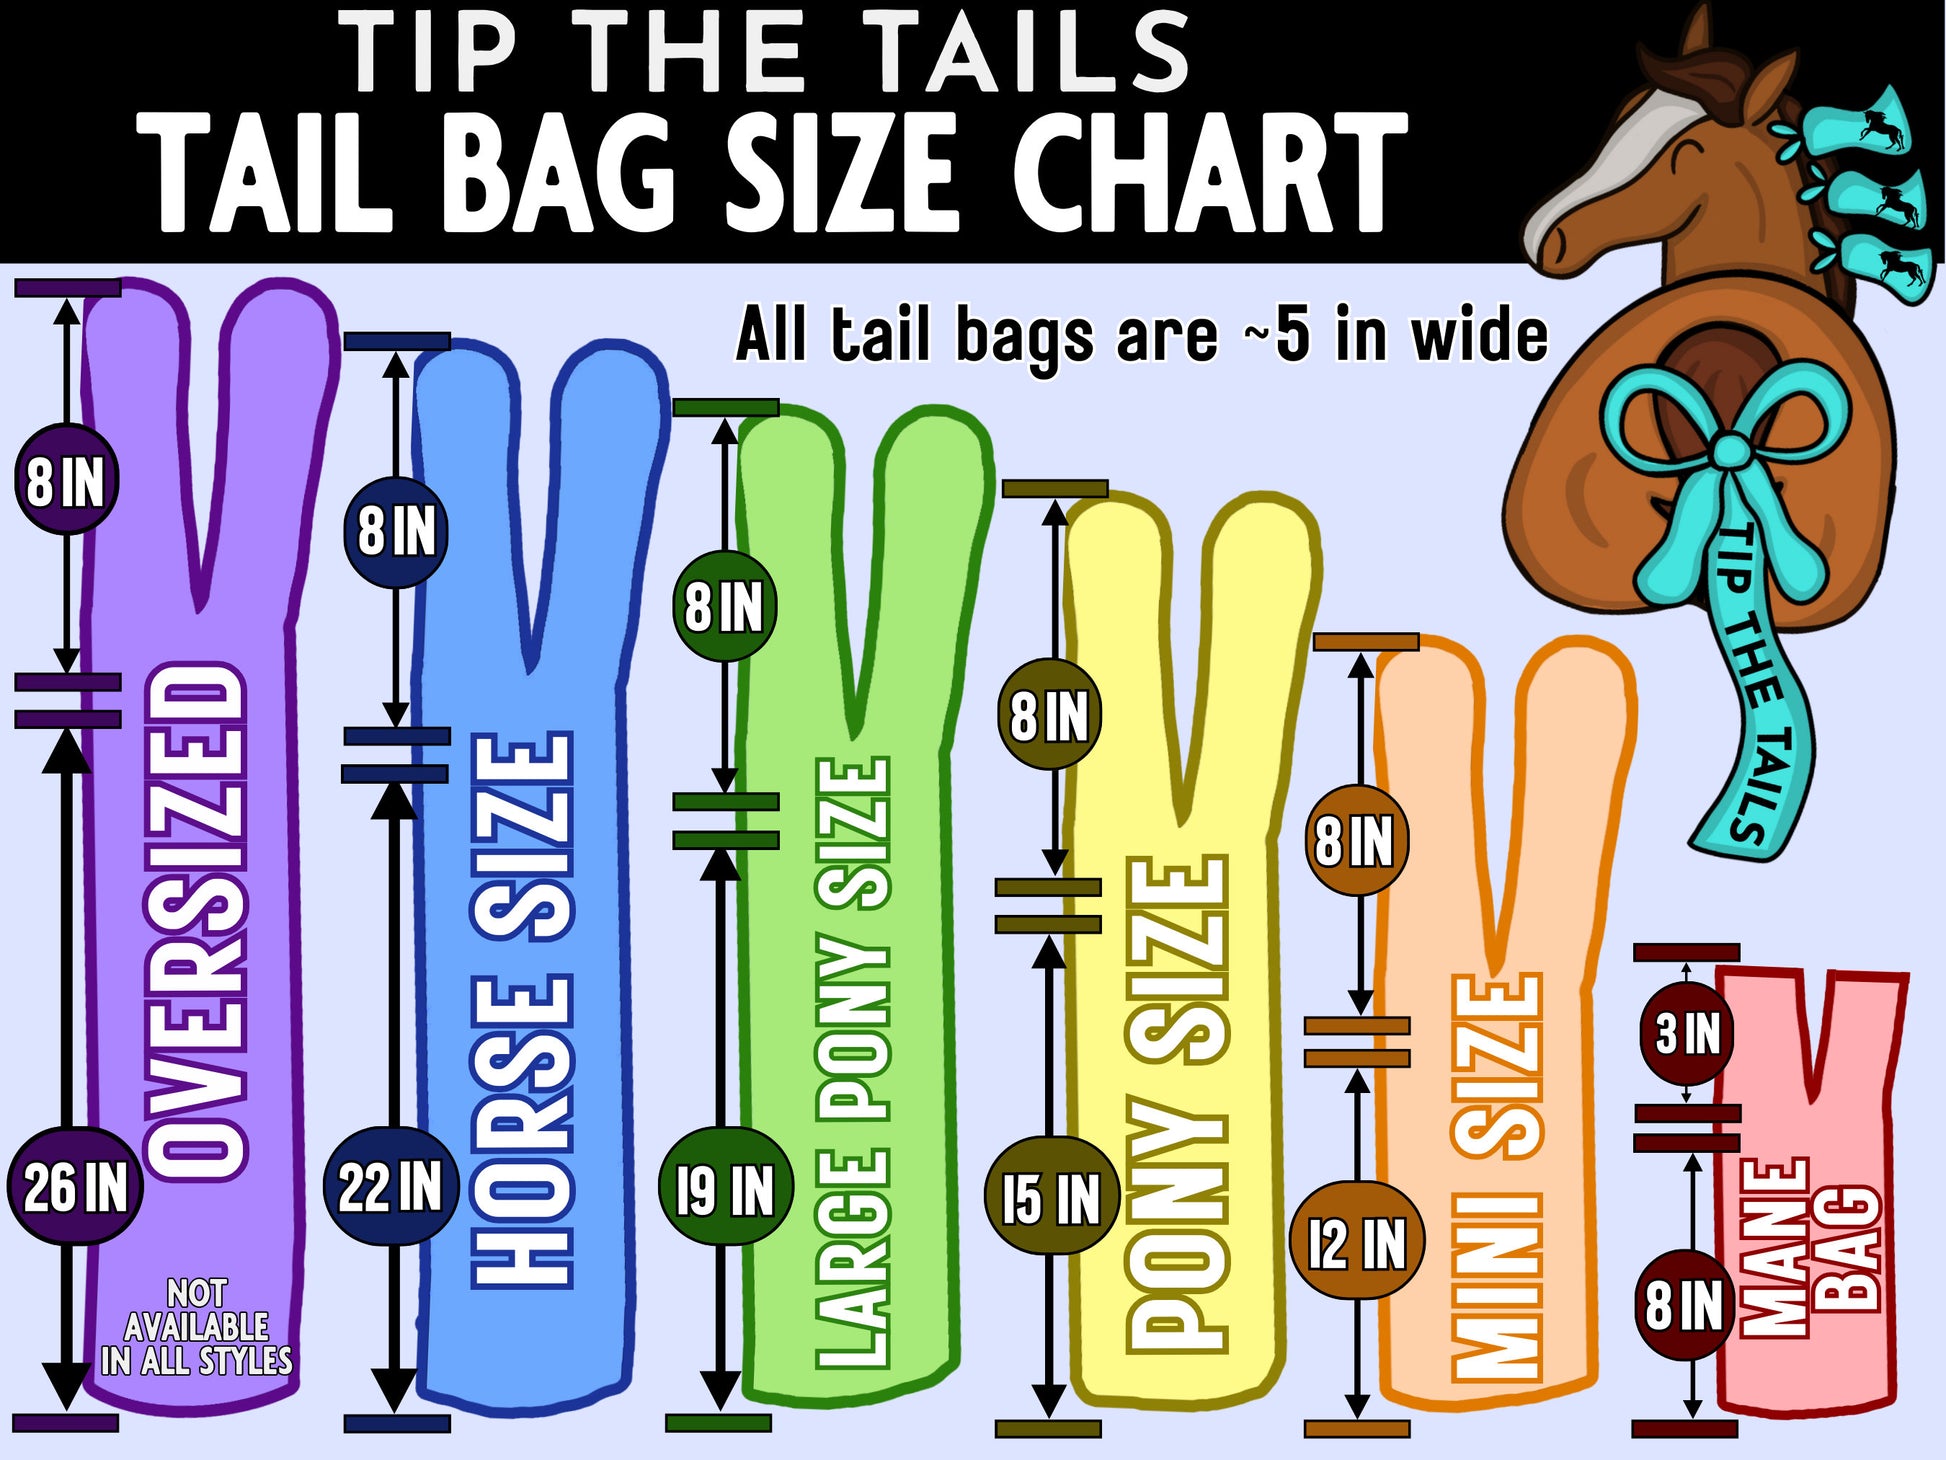 USA Plaid Equine Tail Bag-Tip The Tails